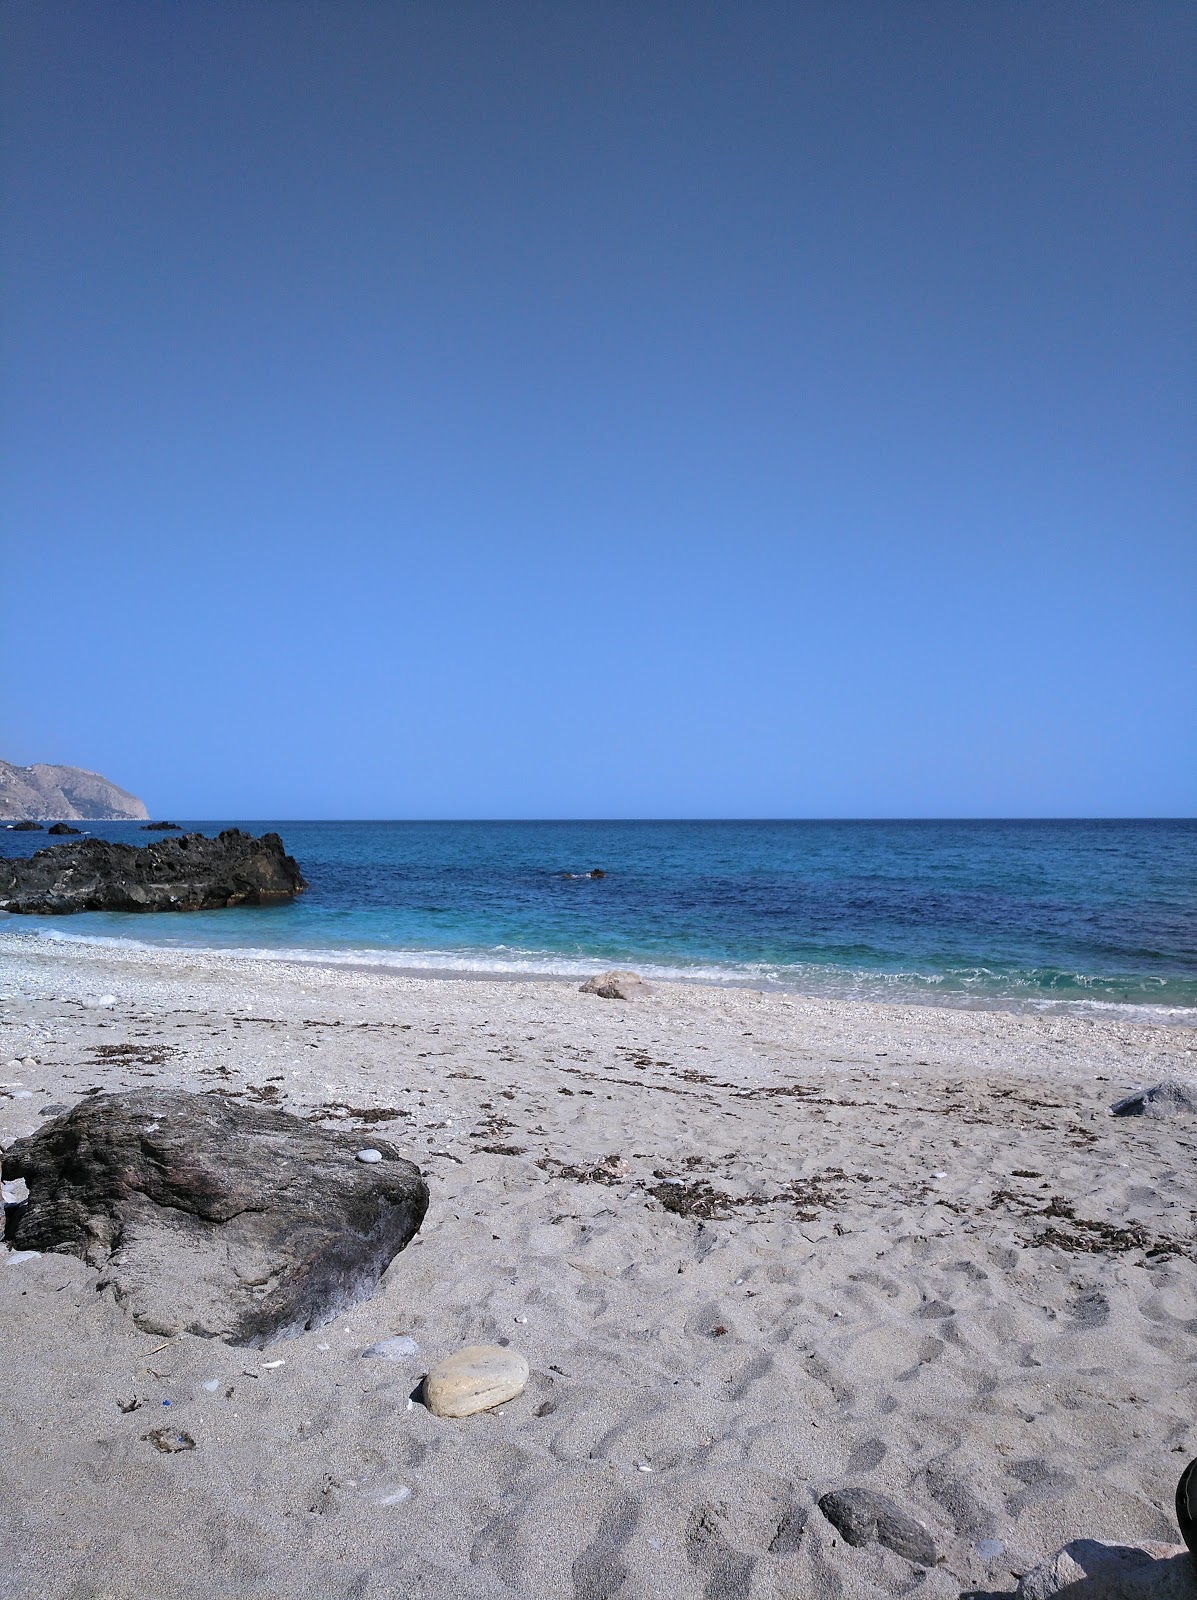 Foto af Caleta beach med turkis rent vand overflade